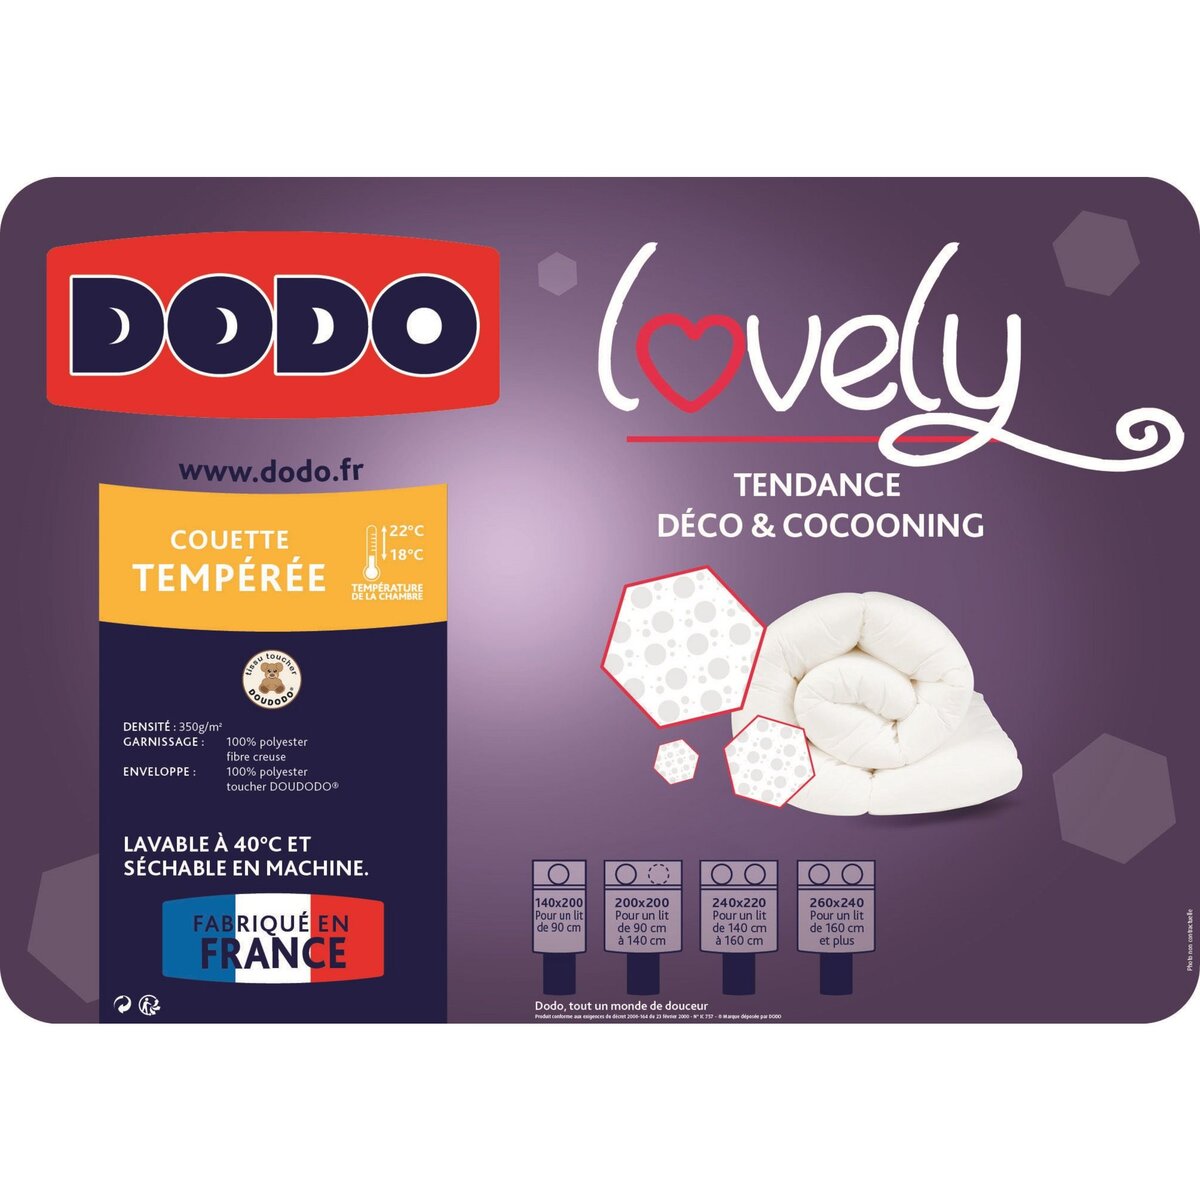 DODO Couette tempérée polyester DODO LOVELY 350g/m2